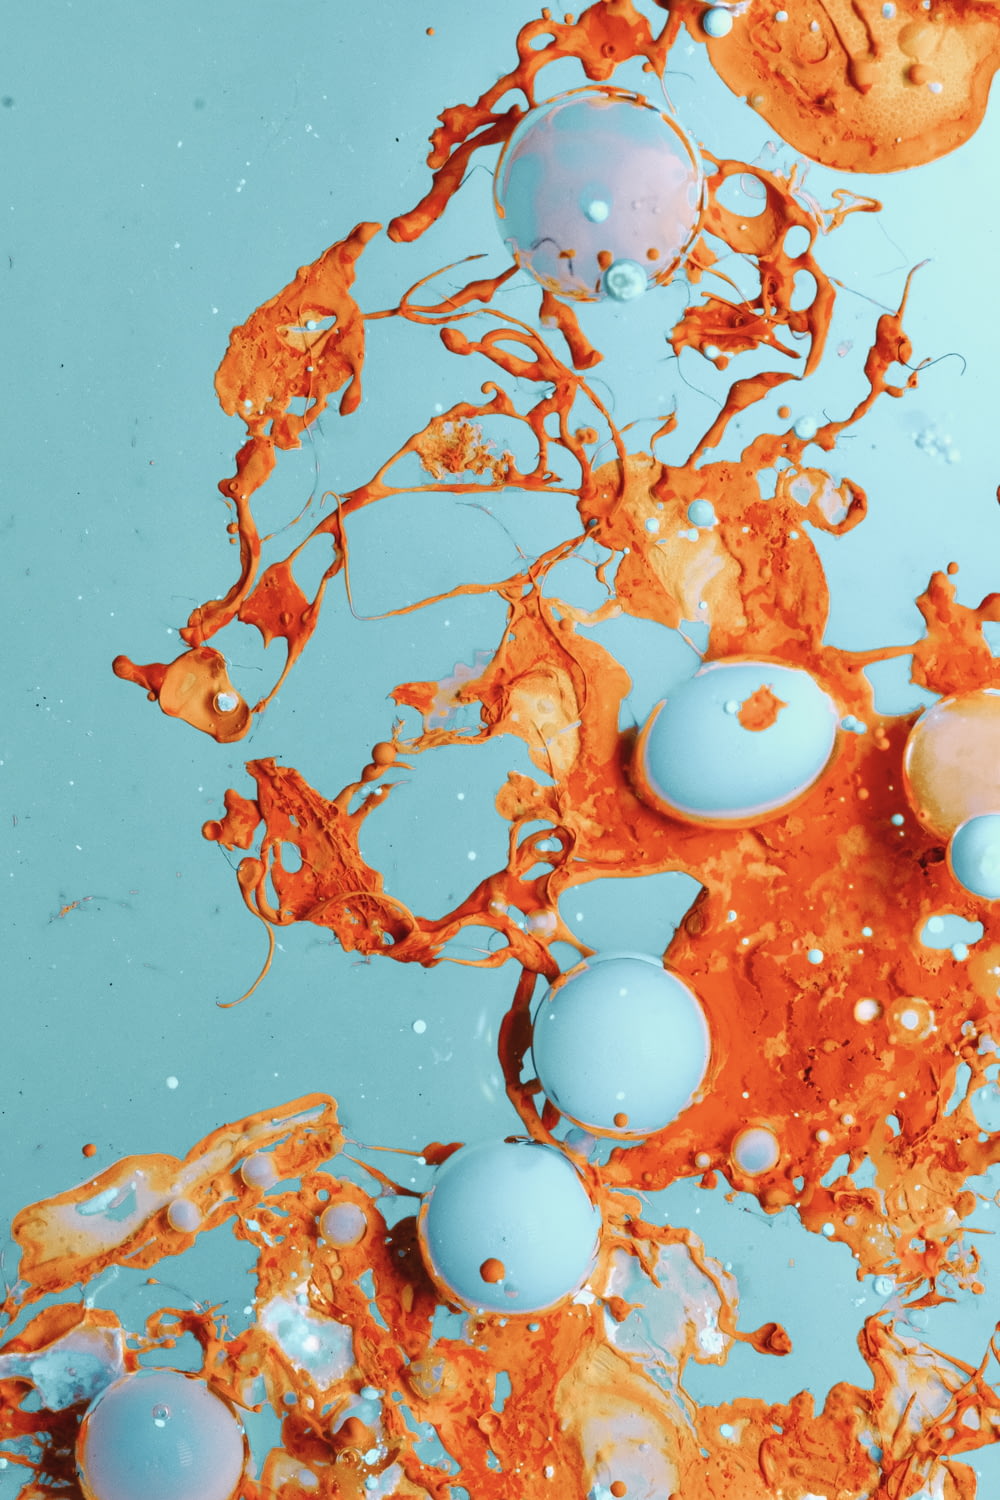 a blue and orange liquid with orange and white bubbles